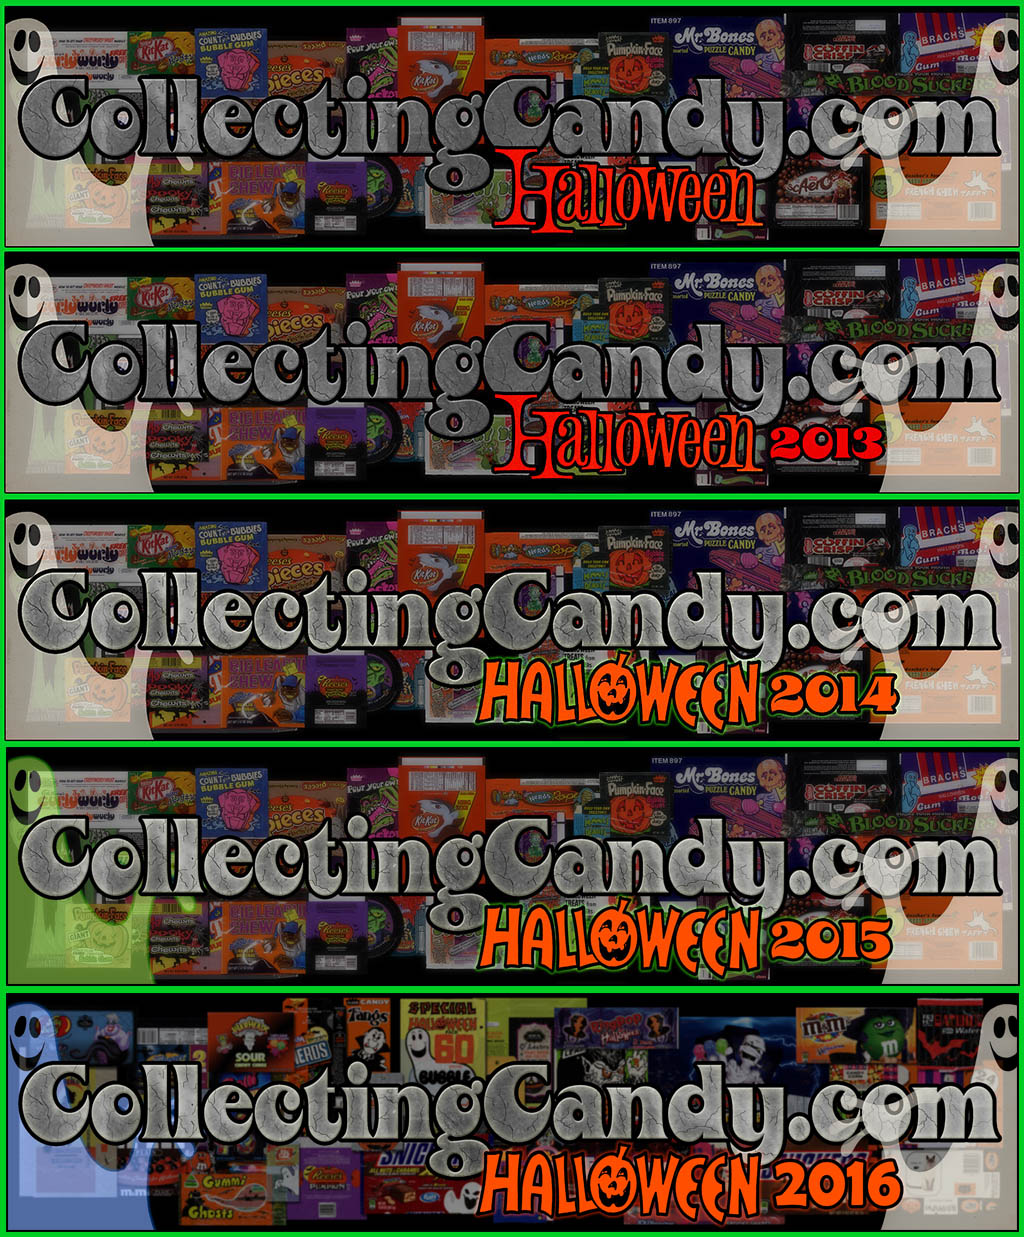 CollectingCandy.com's Halloween Masthead evolution - 2012-2016